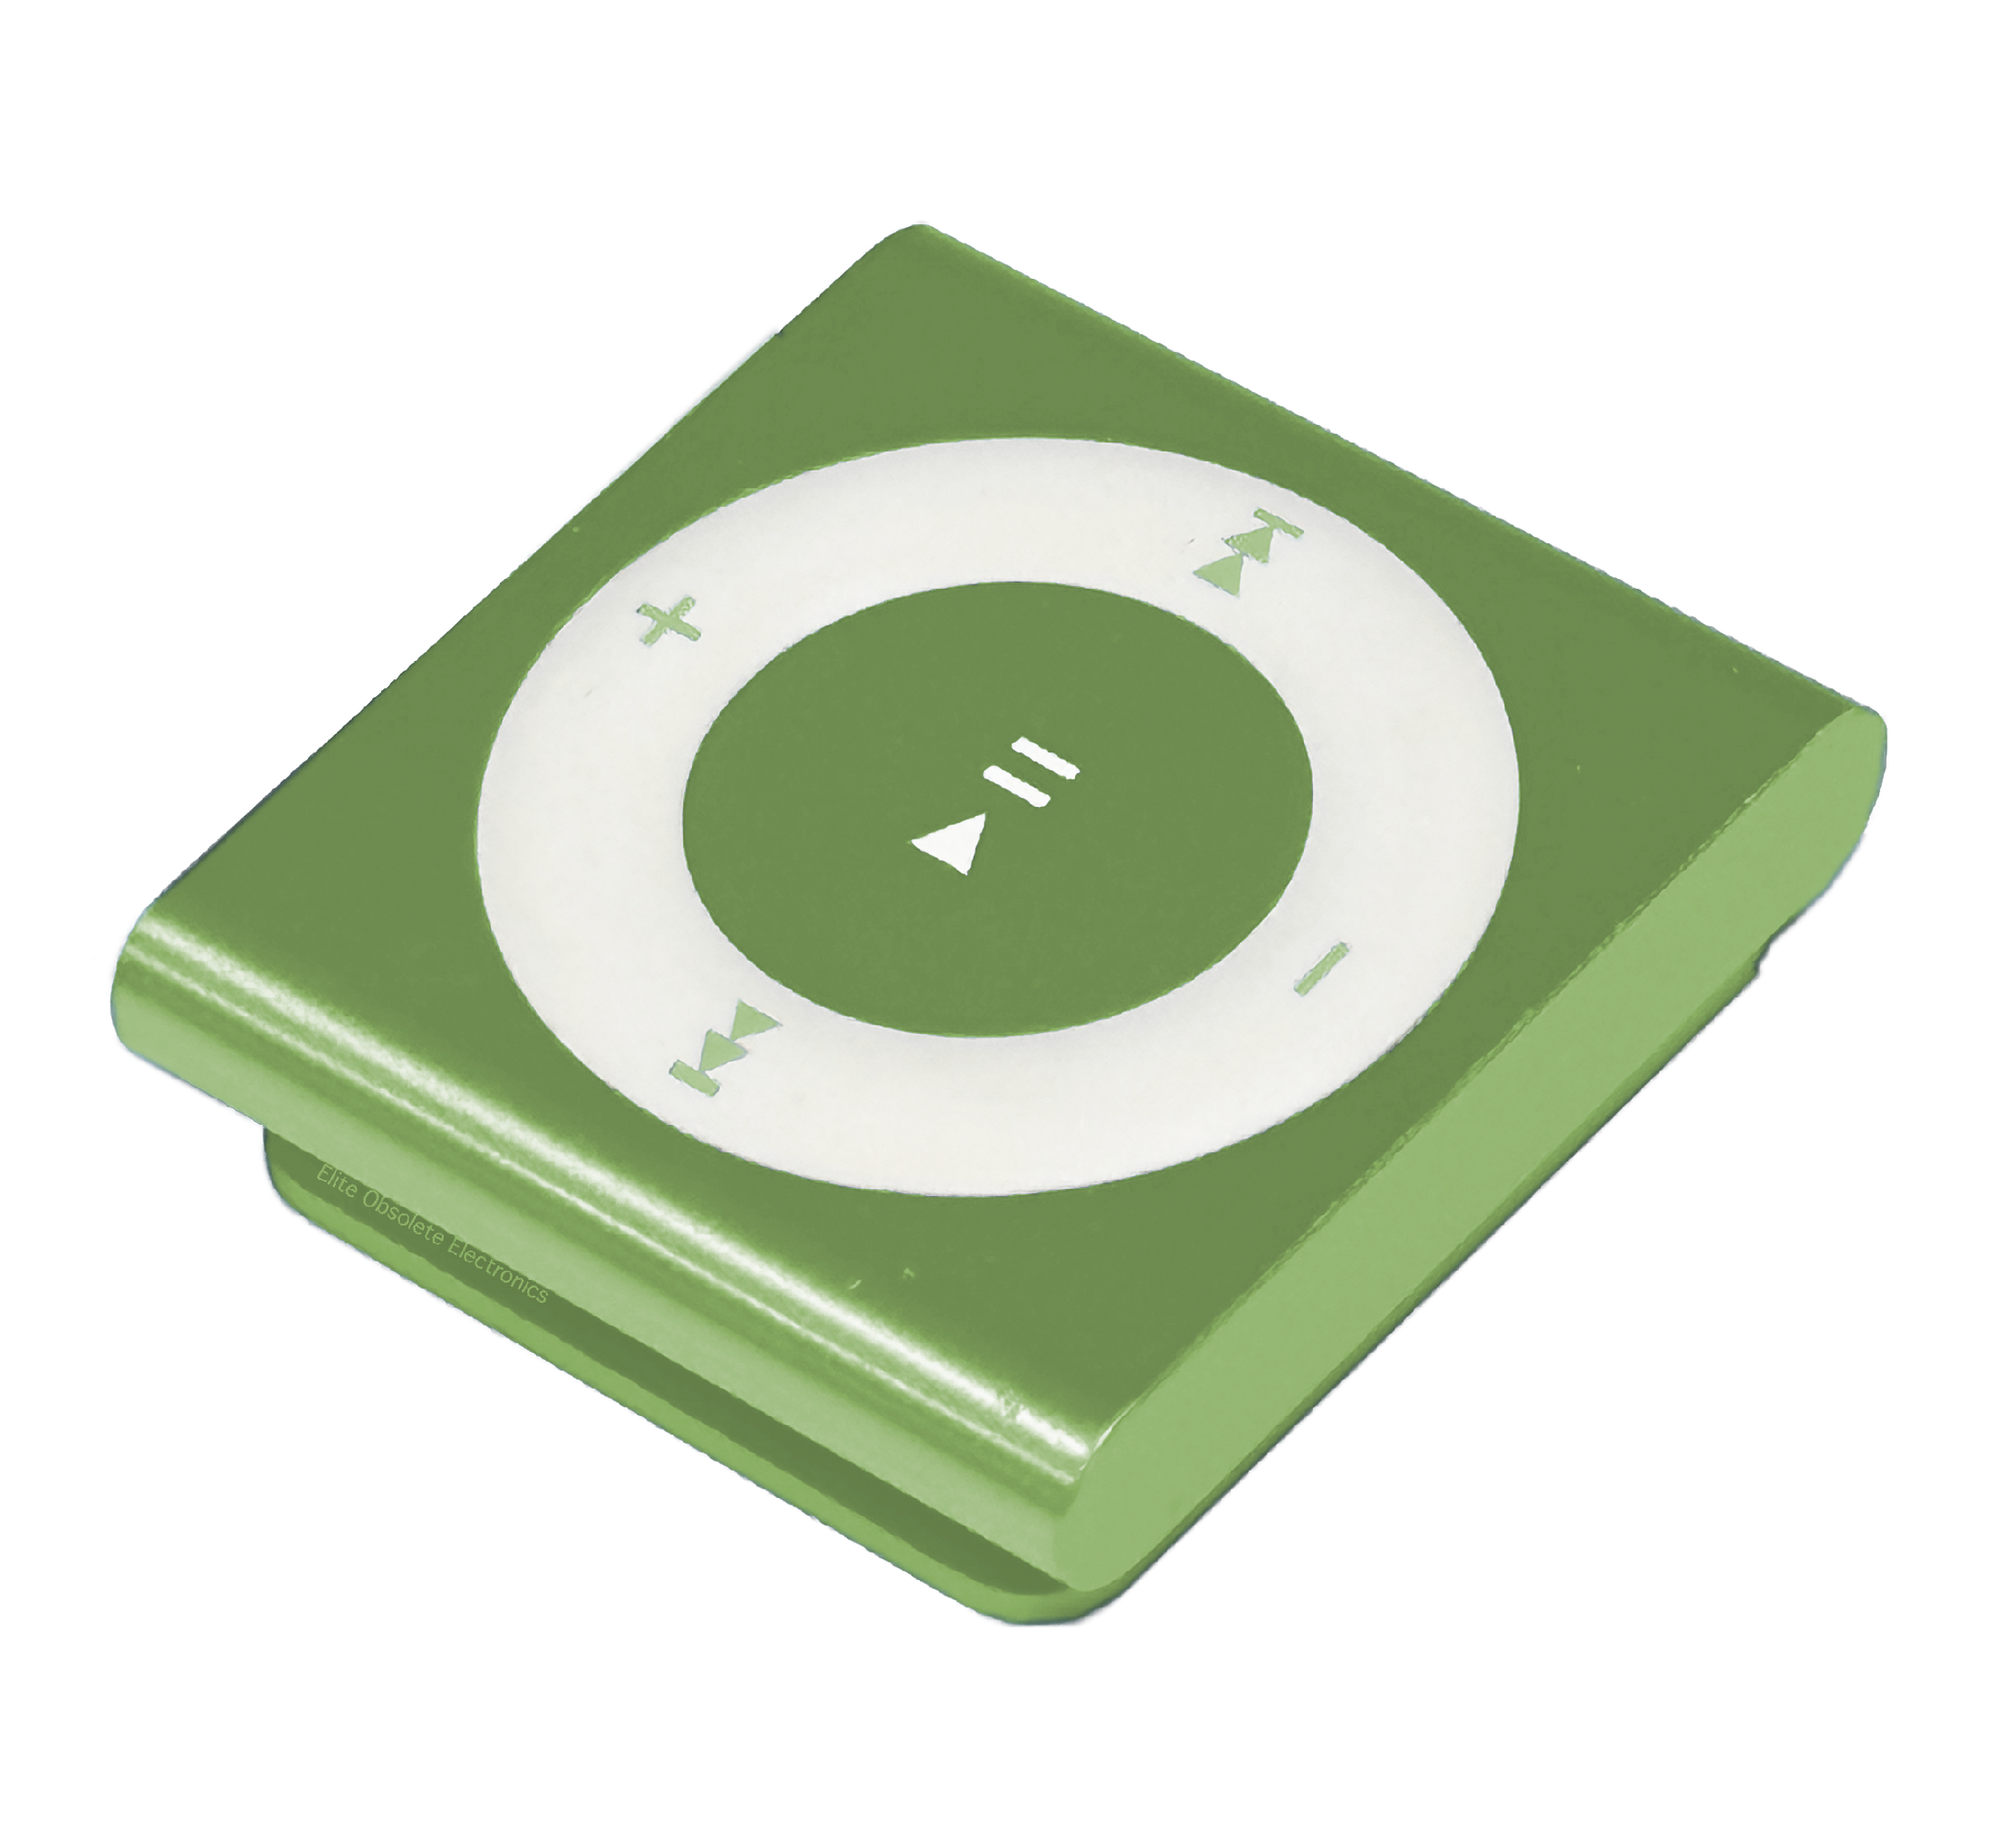 Used Apple iPod Shuffle 4th Generation 2GB Green A1373 MD776LL/A